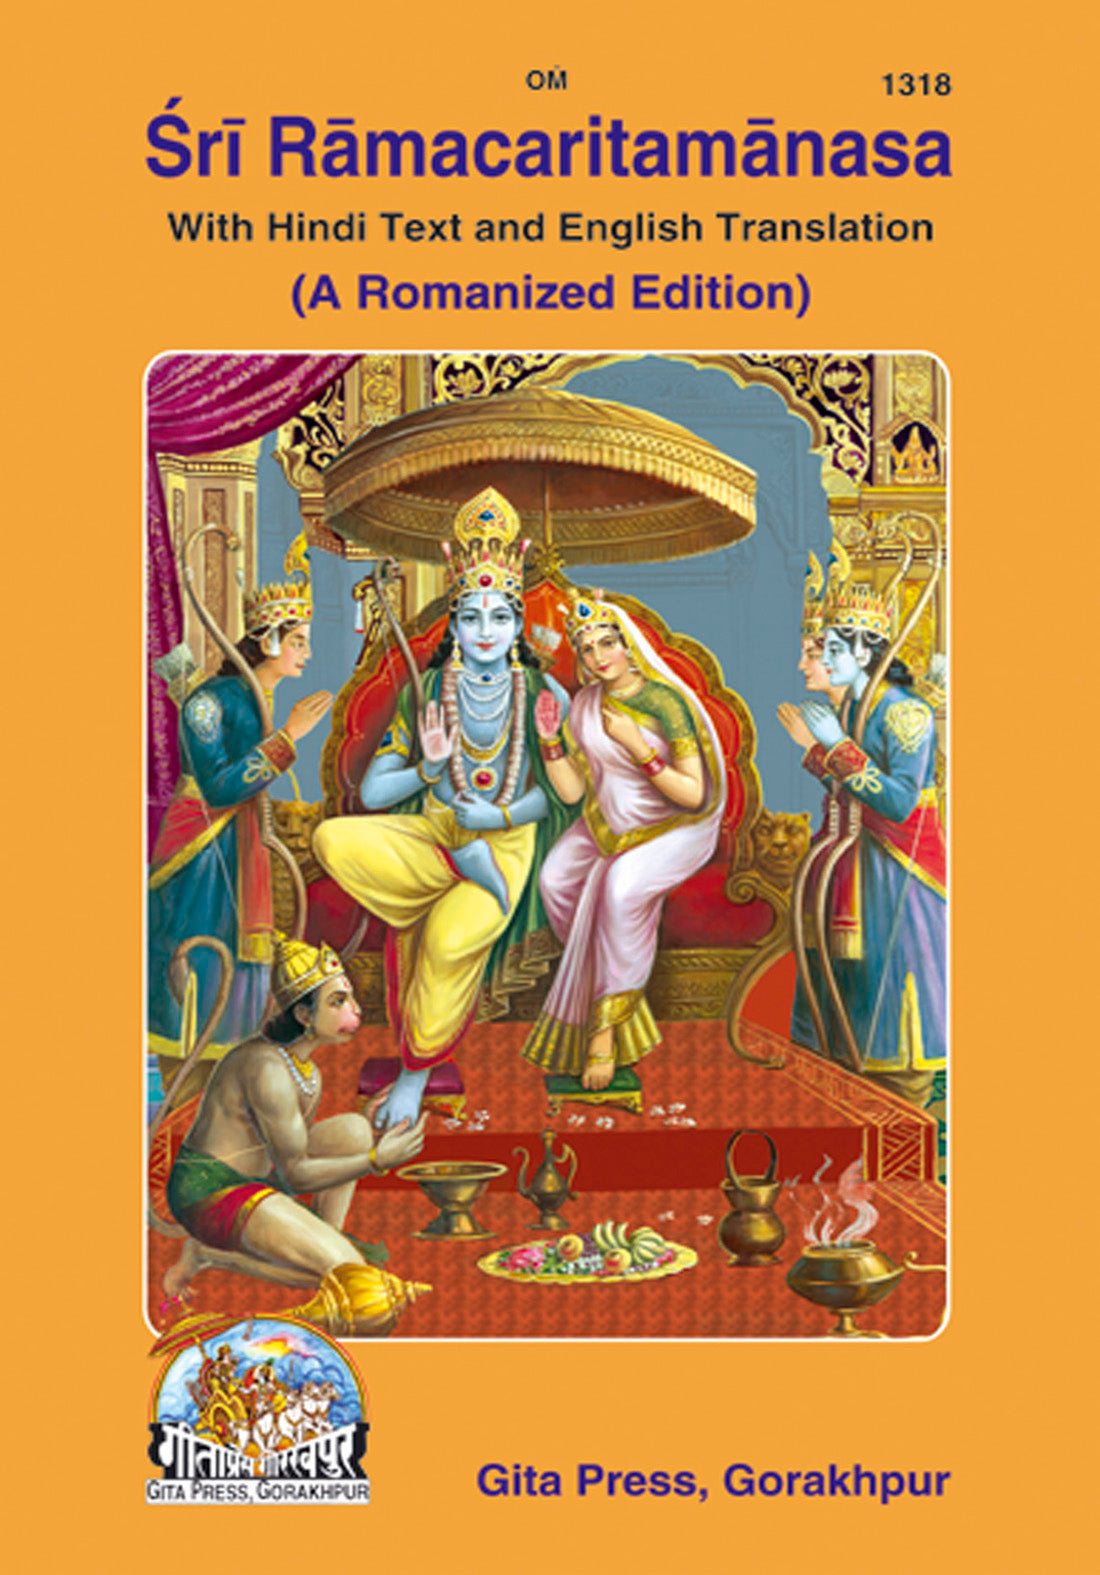 Sri Ramcharita Manasa Roman (English) by Gita Press